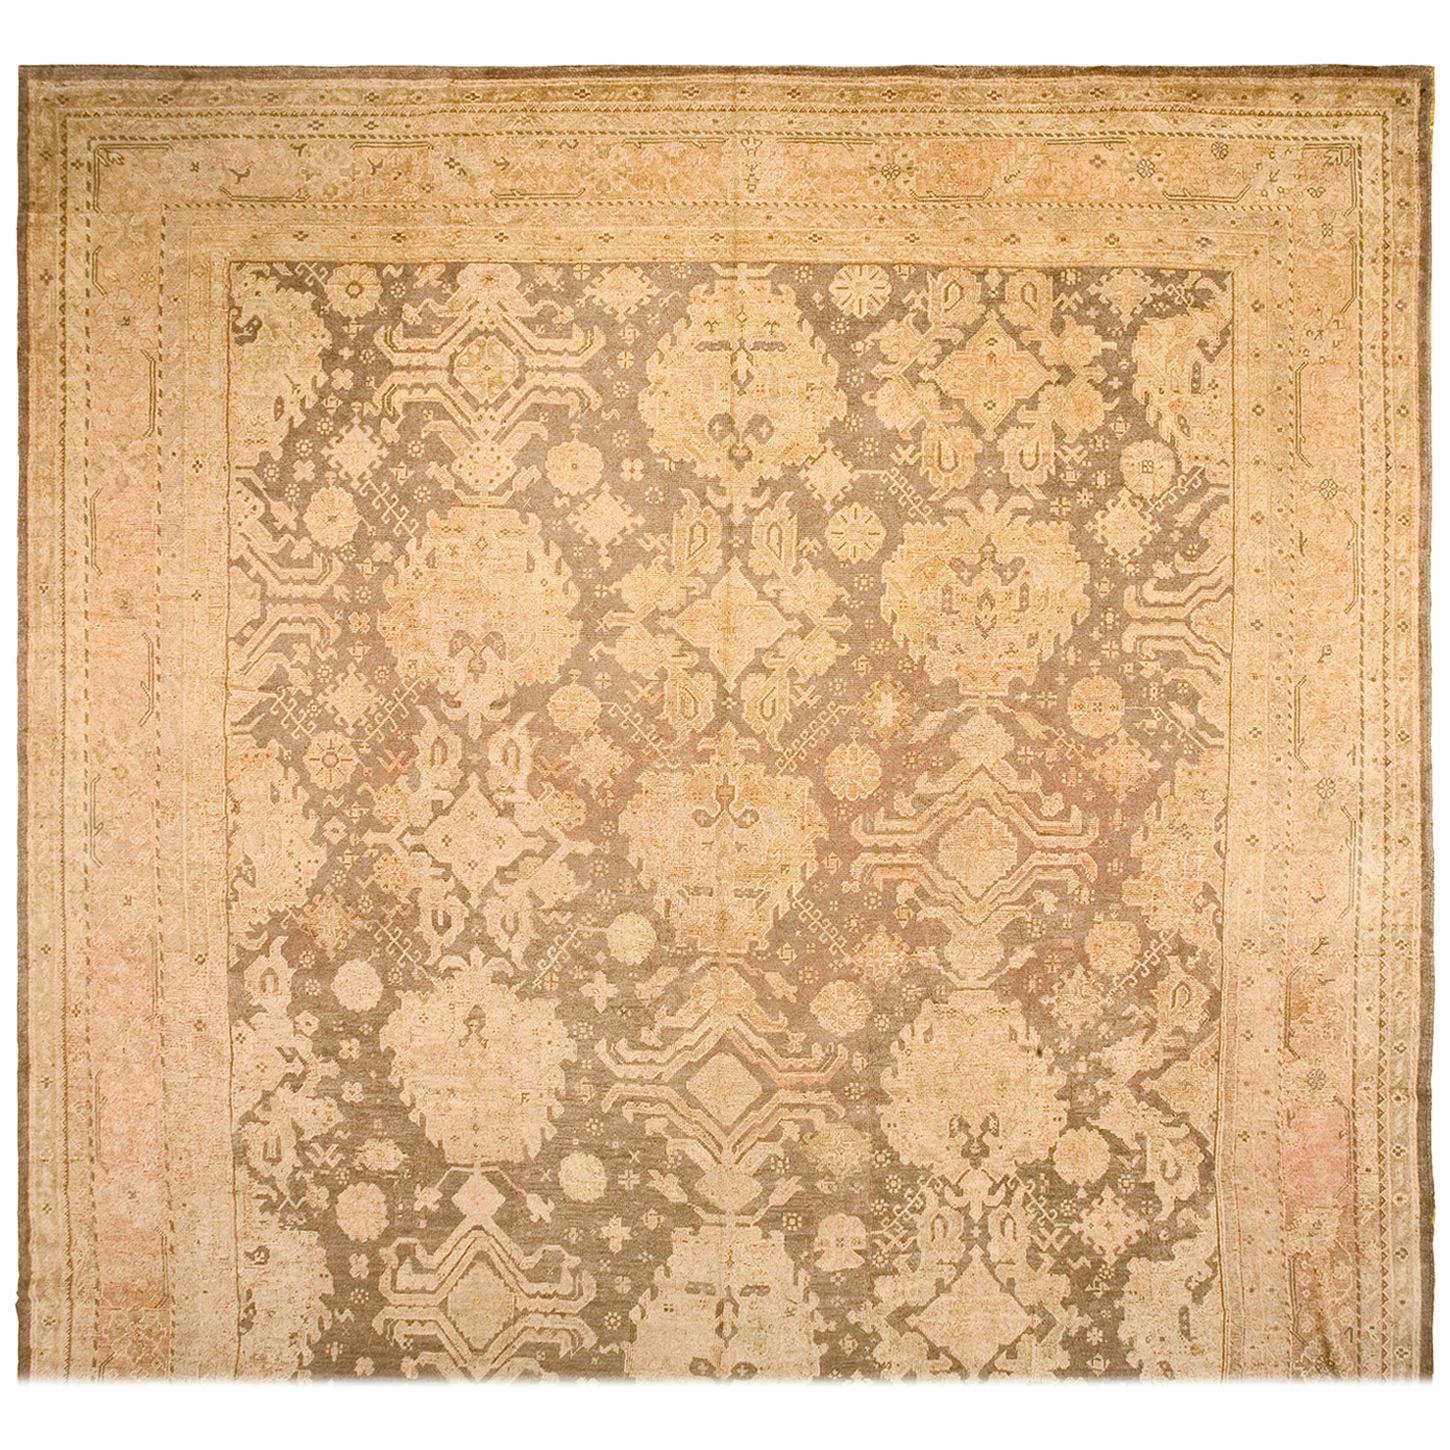 Early 20th Century Turkish Oushak Carpet ( 16' x 21'6" - 457 x 655 )